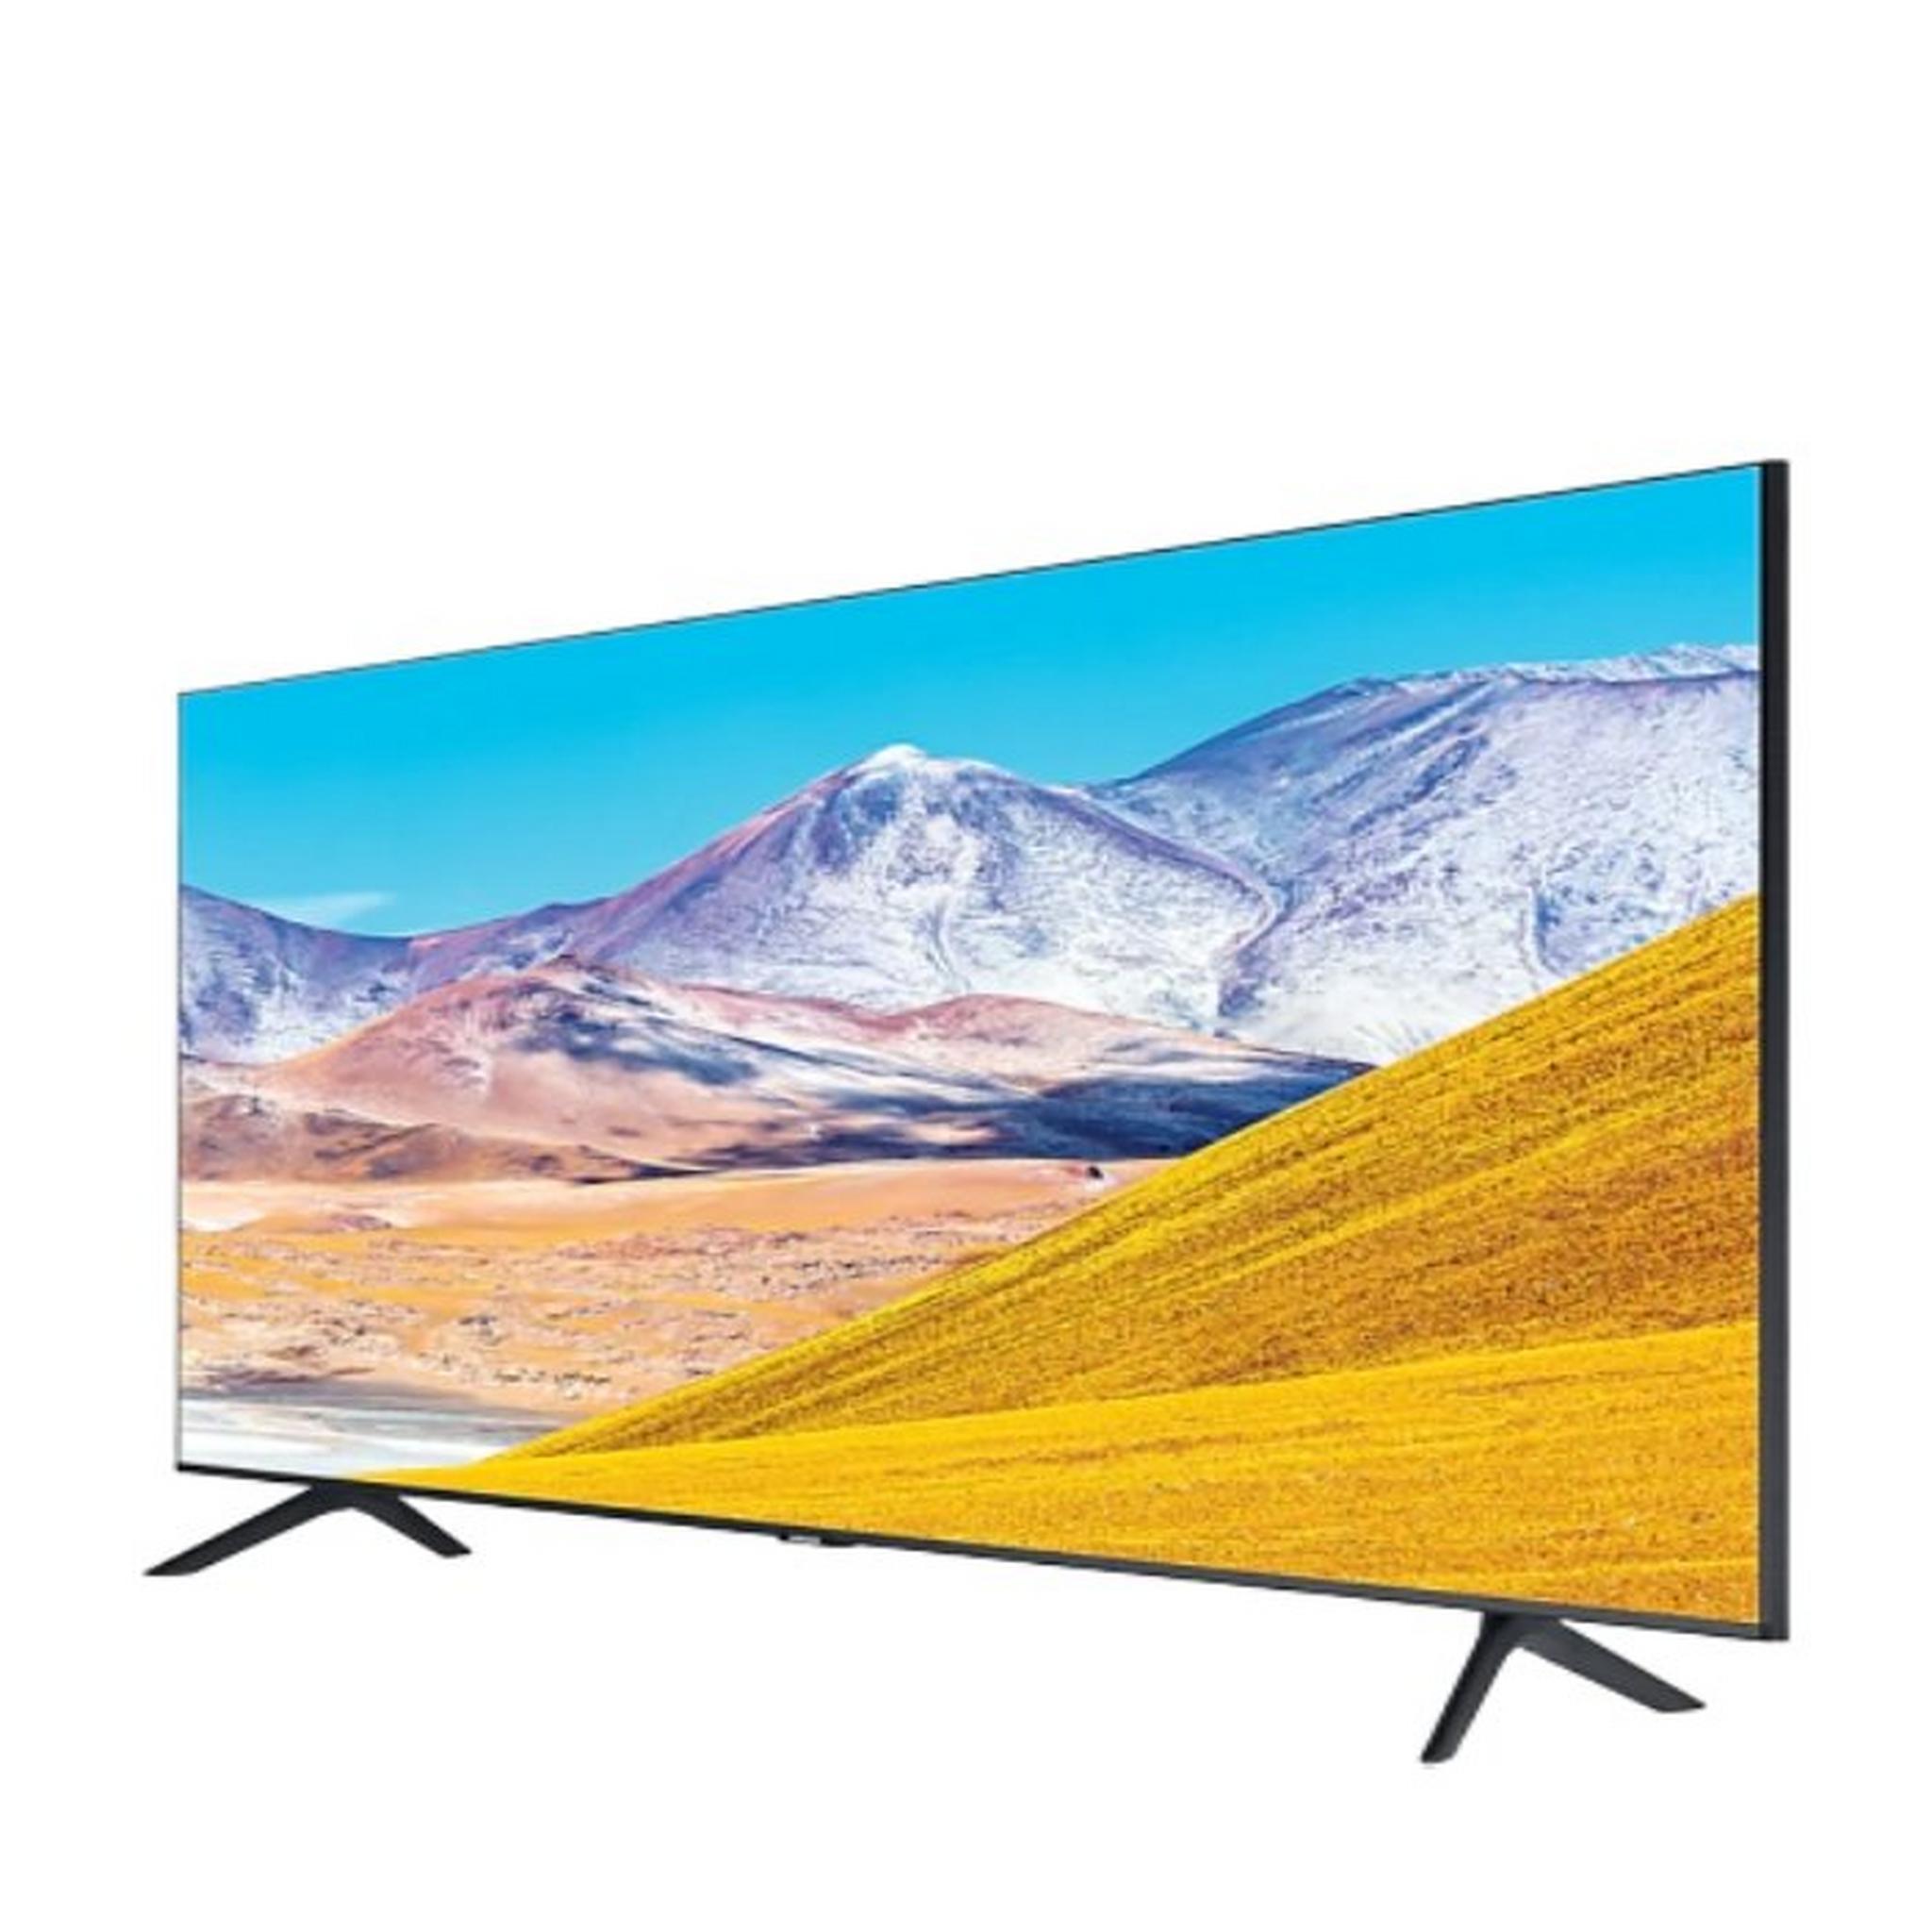 Samsung TV 75" UHD 4k Smart LED (UA75TU8000)